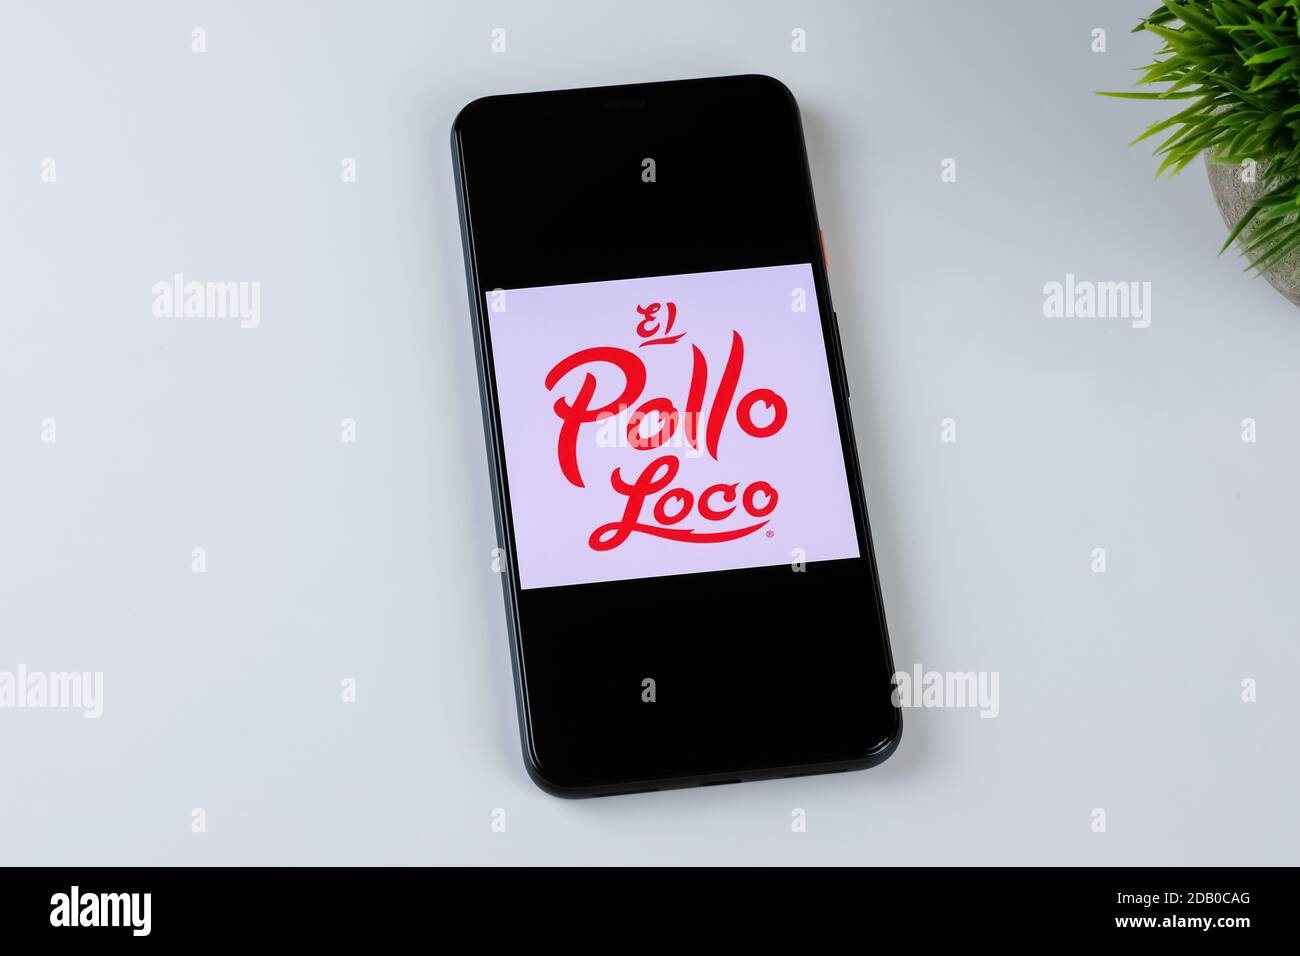 El Pollo Loco app logo on a smartphone screen Stock Photo - Alamy